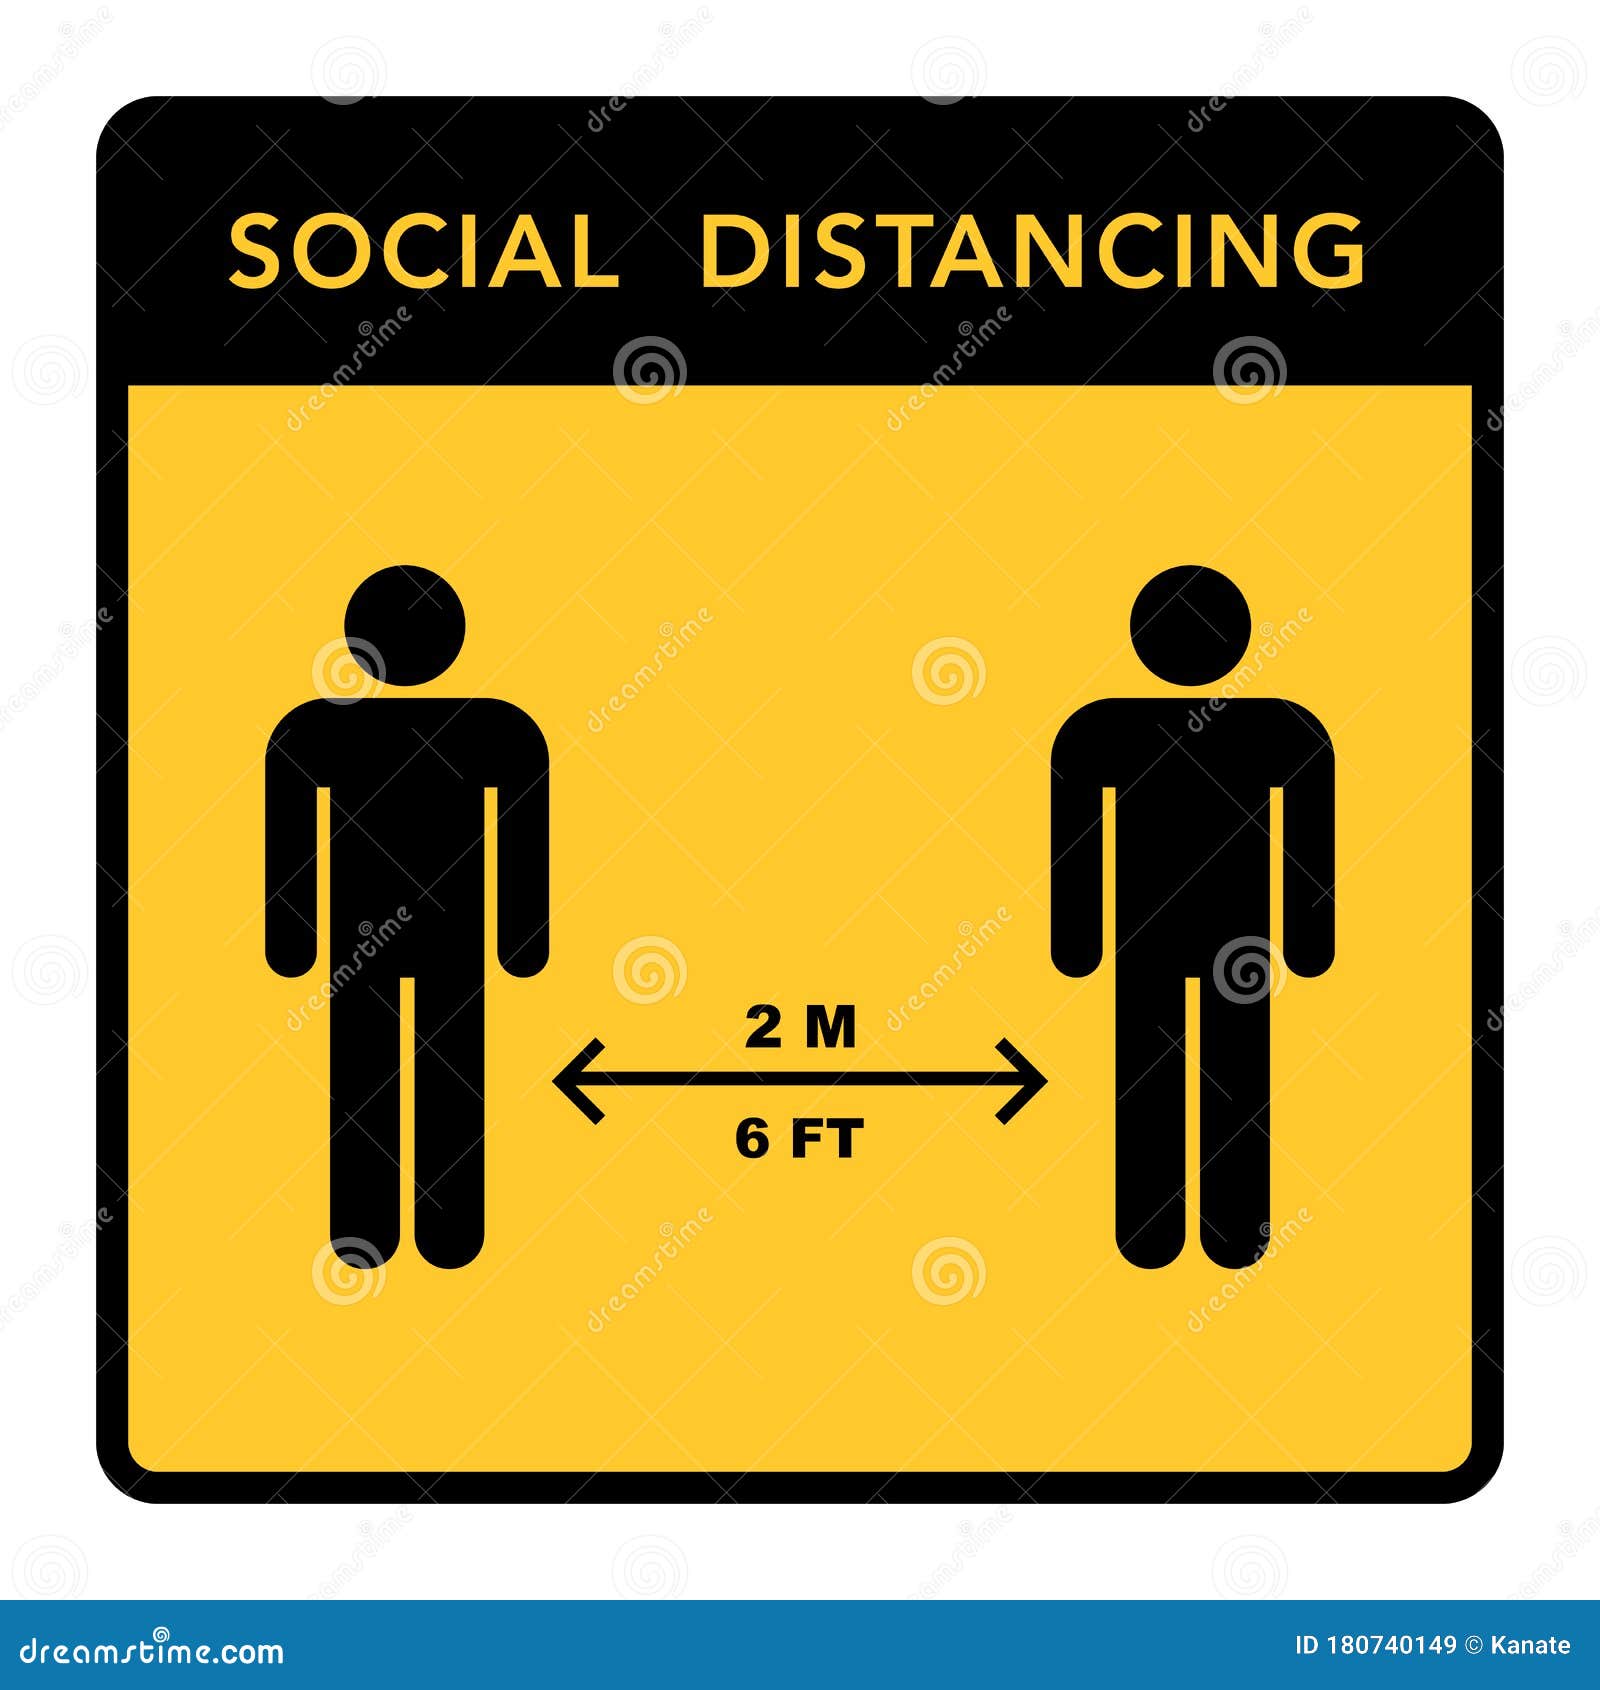 social distancing banner. keep the 2 meter distance. coronovirus epidemic protective